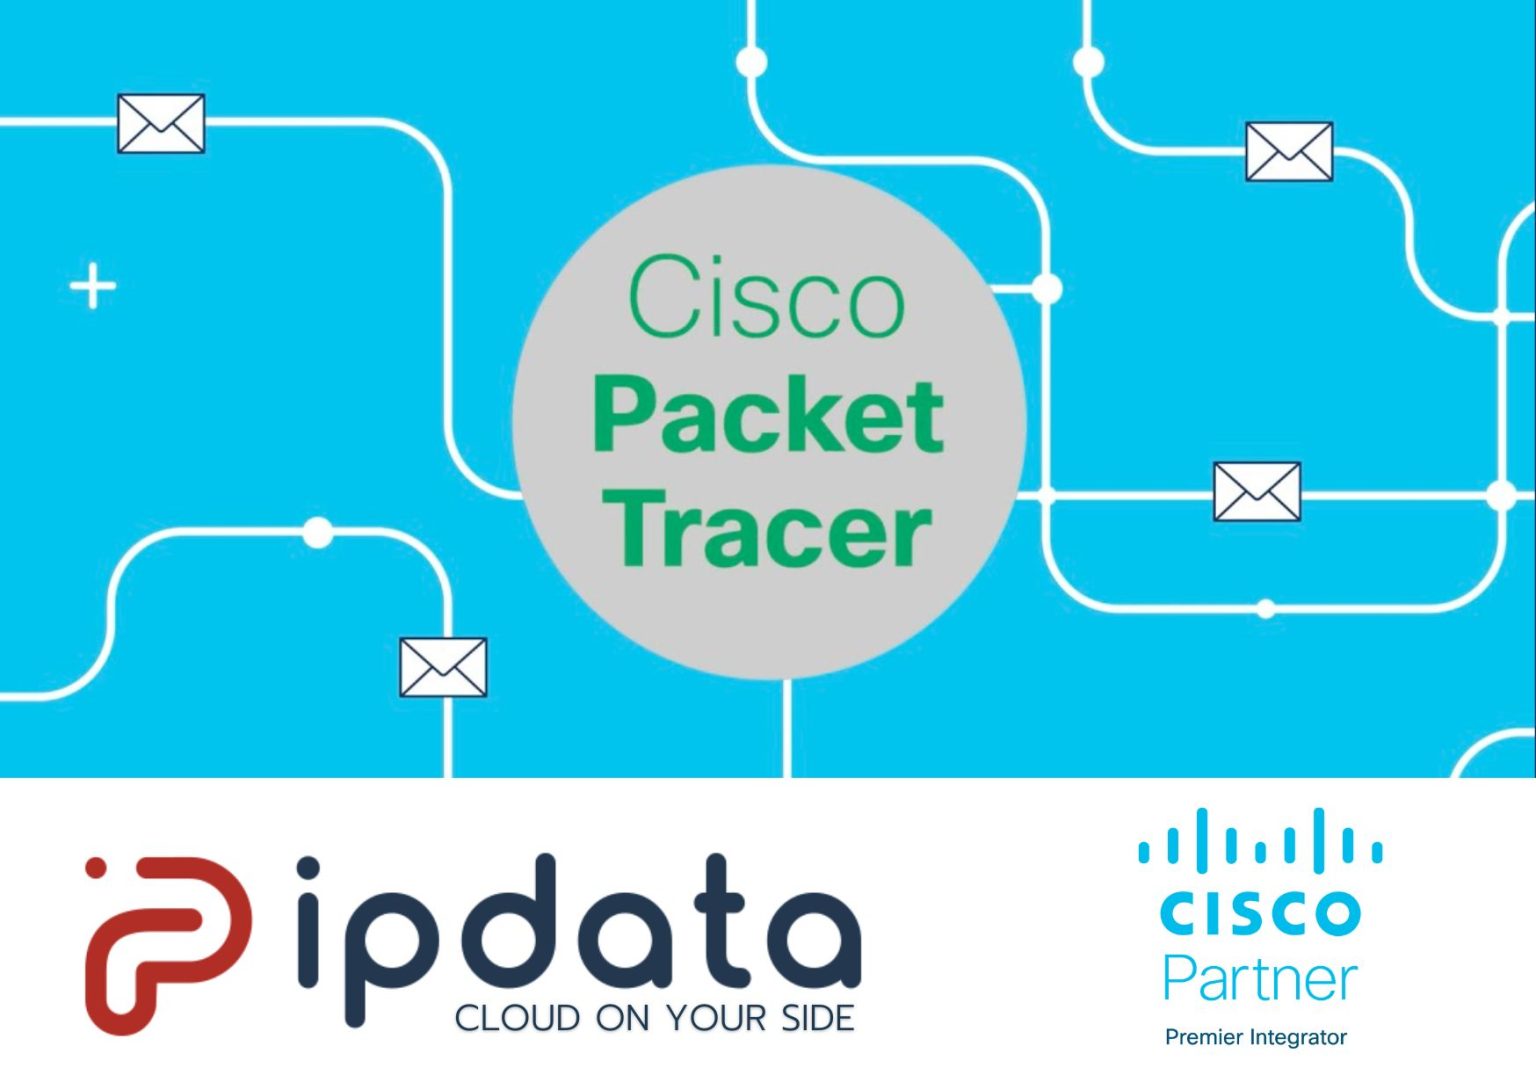 Cisco Packet Tracer IPDATA